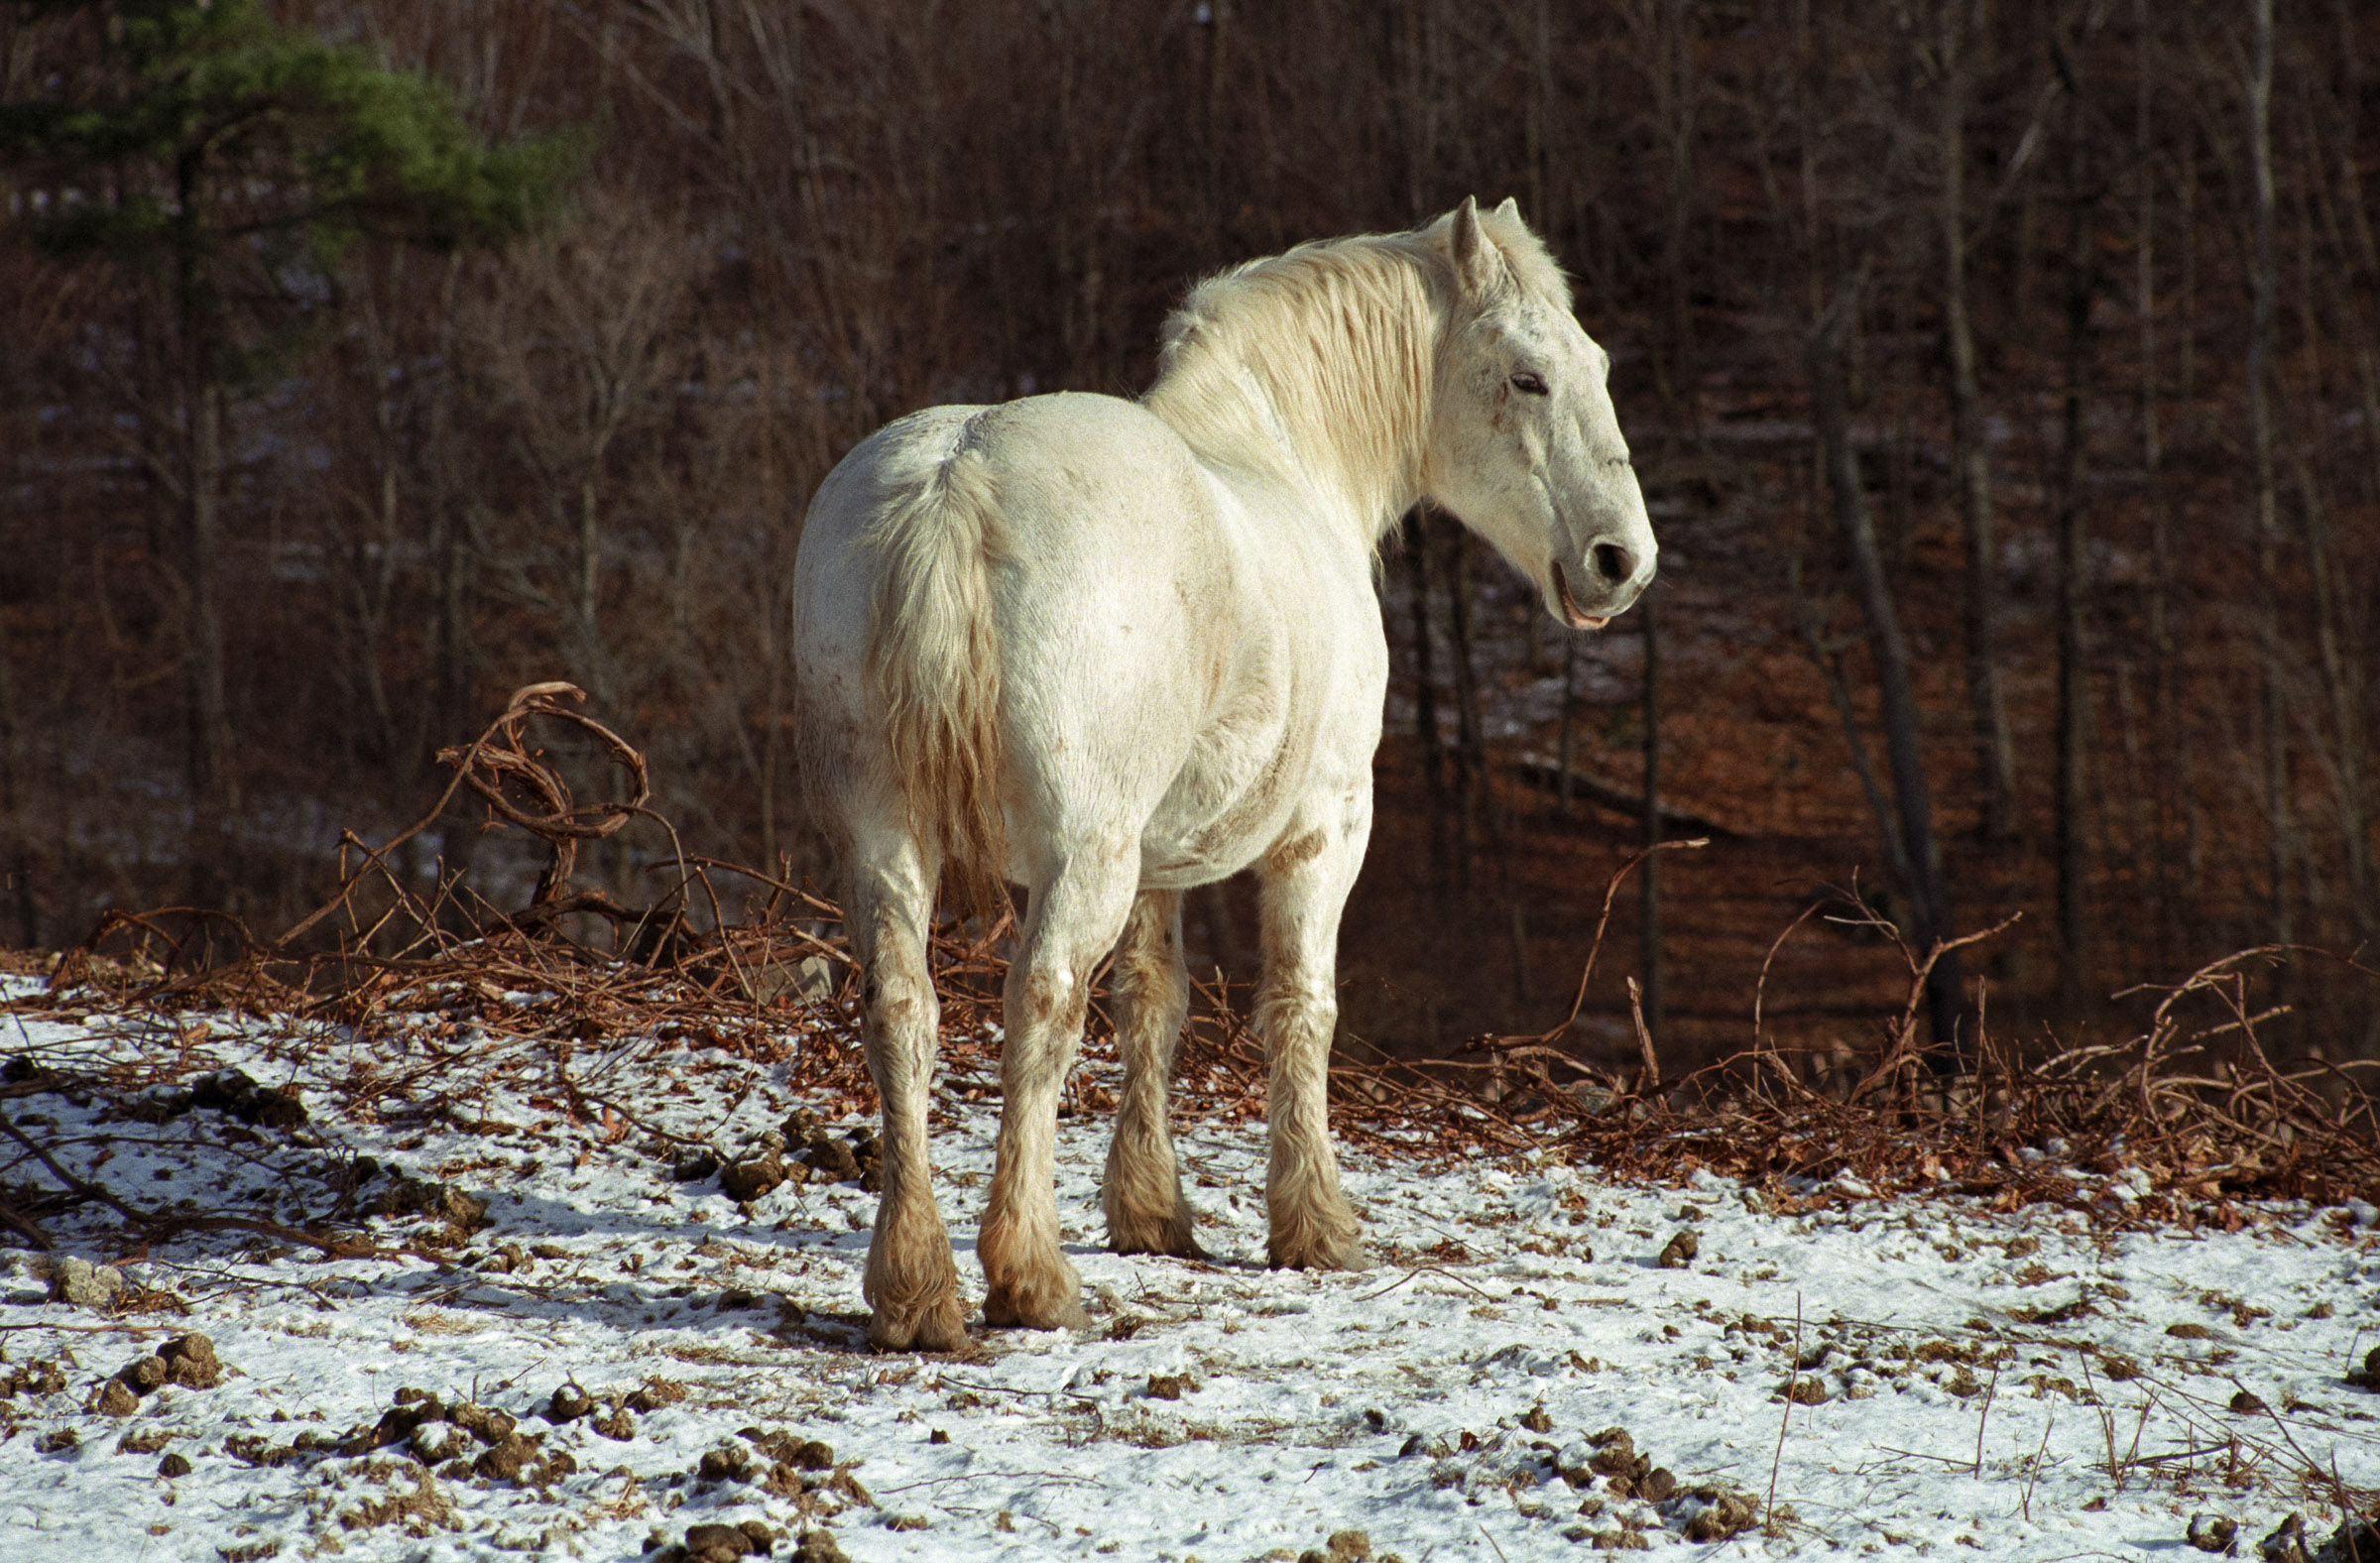 Snow Horse